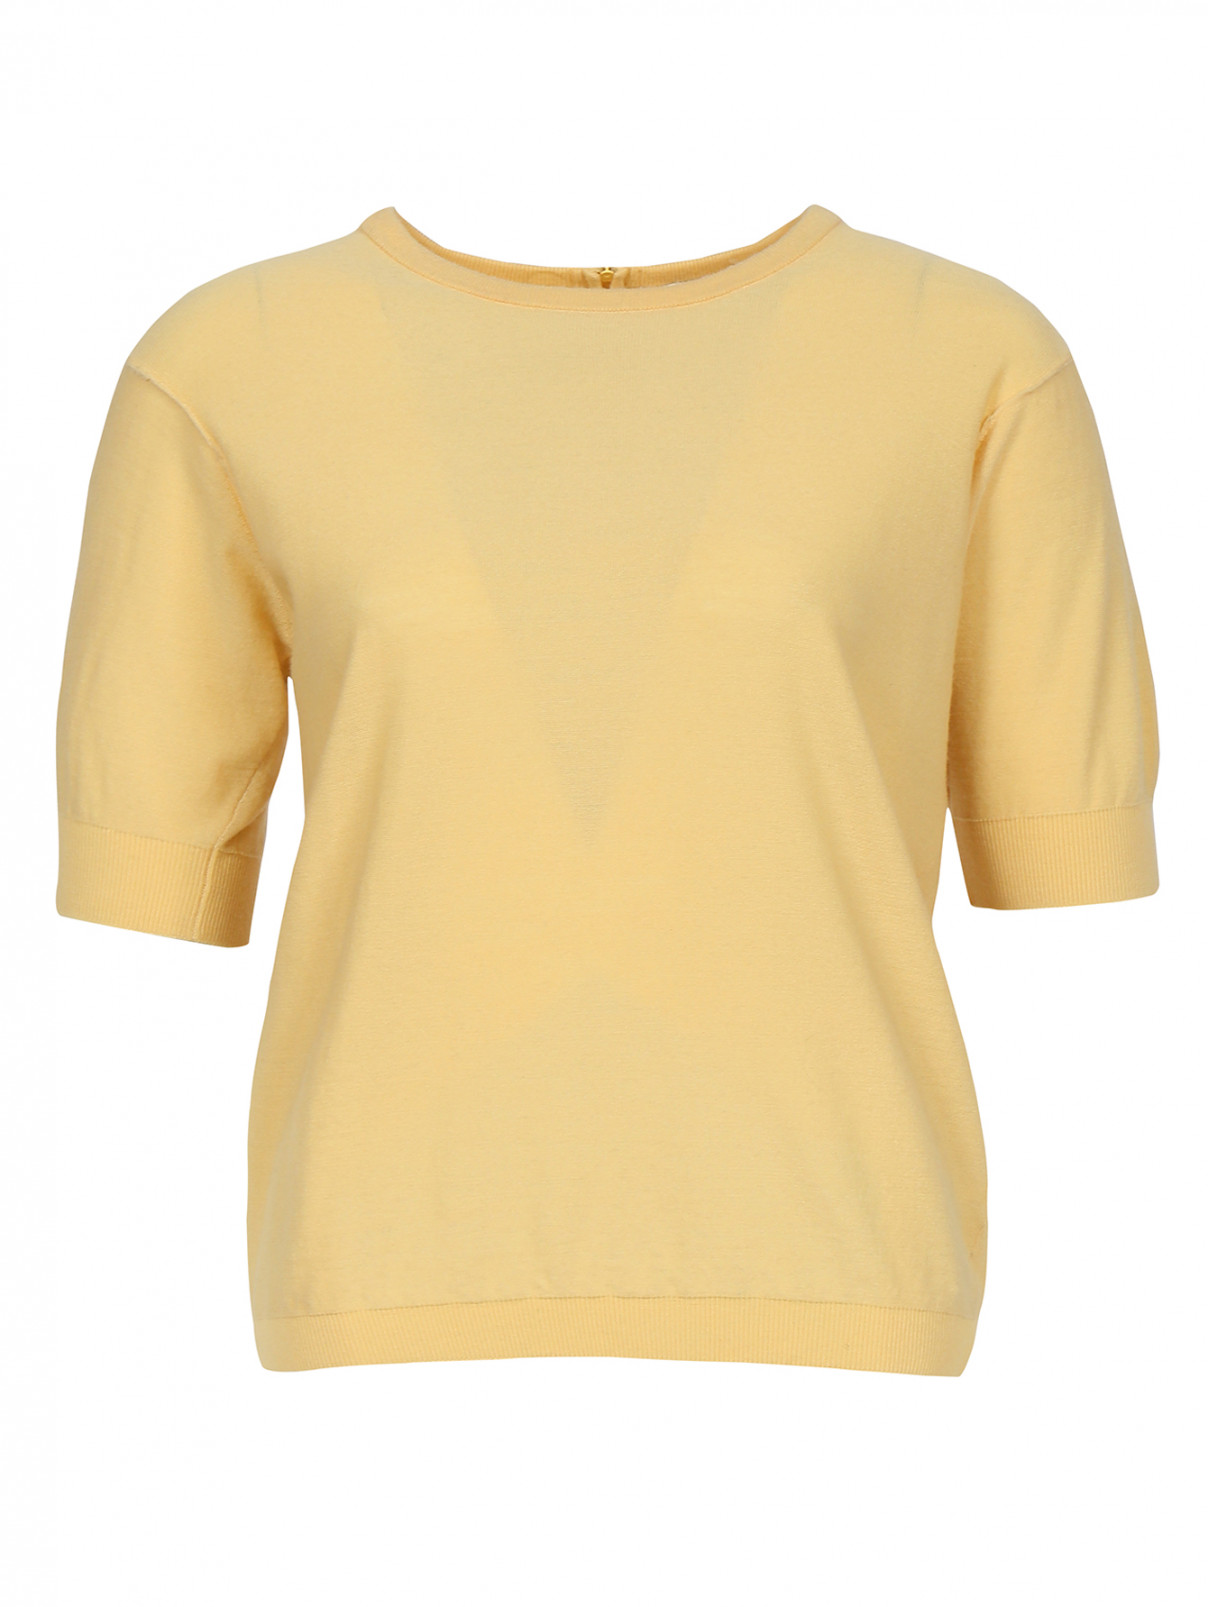 Джемпер  из шерсти на молнии Sonia Rykiel  –  Общий вид  – Цвет:  Желтый